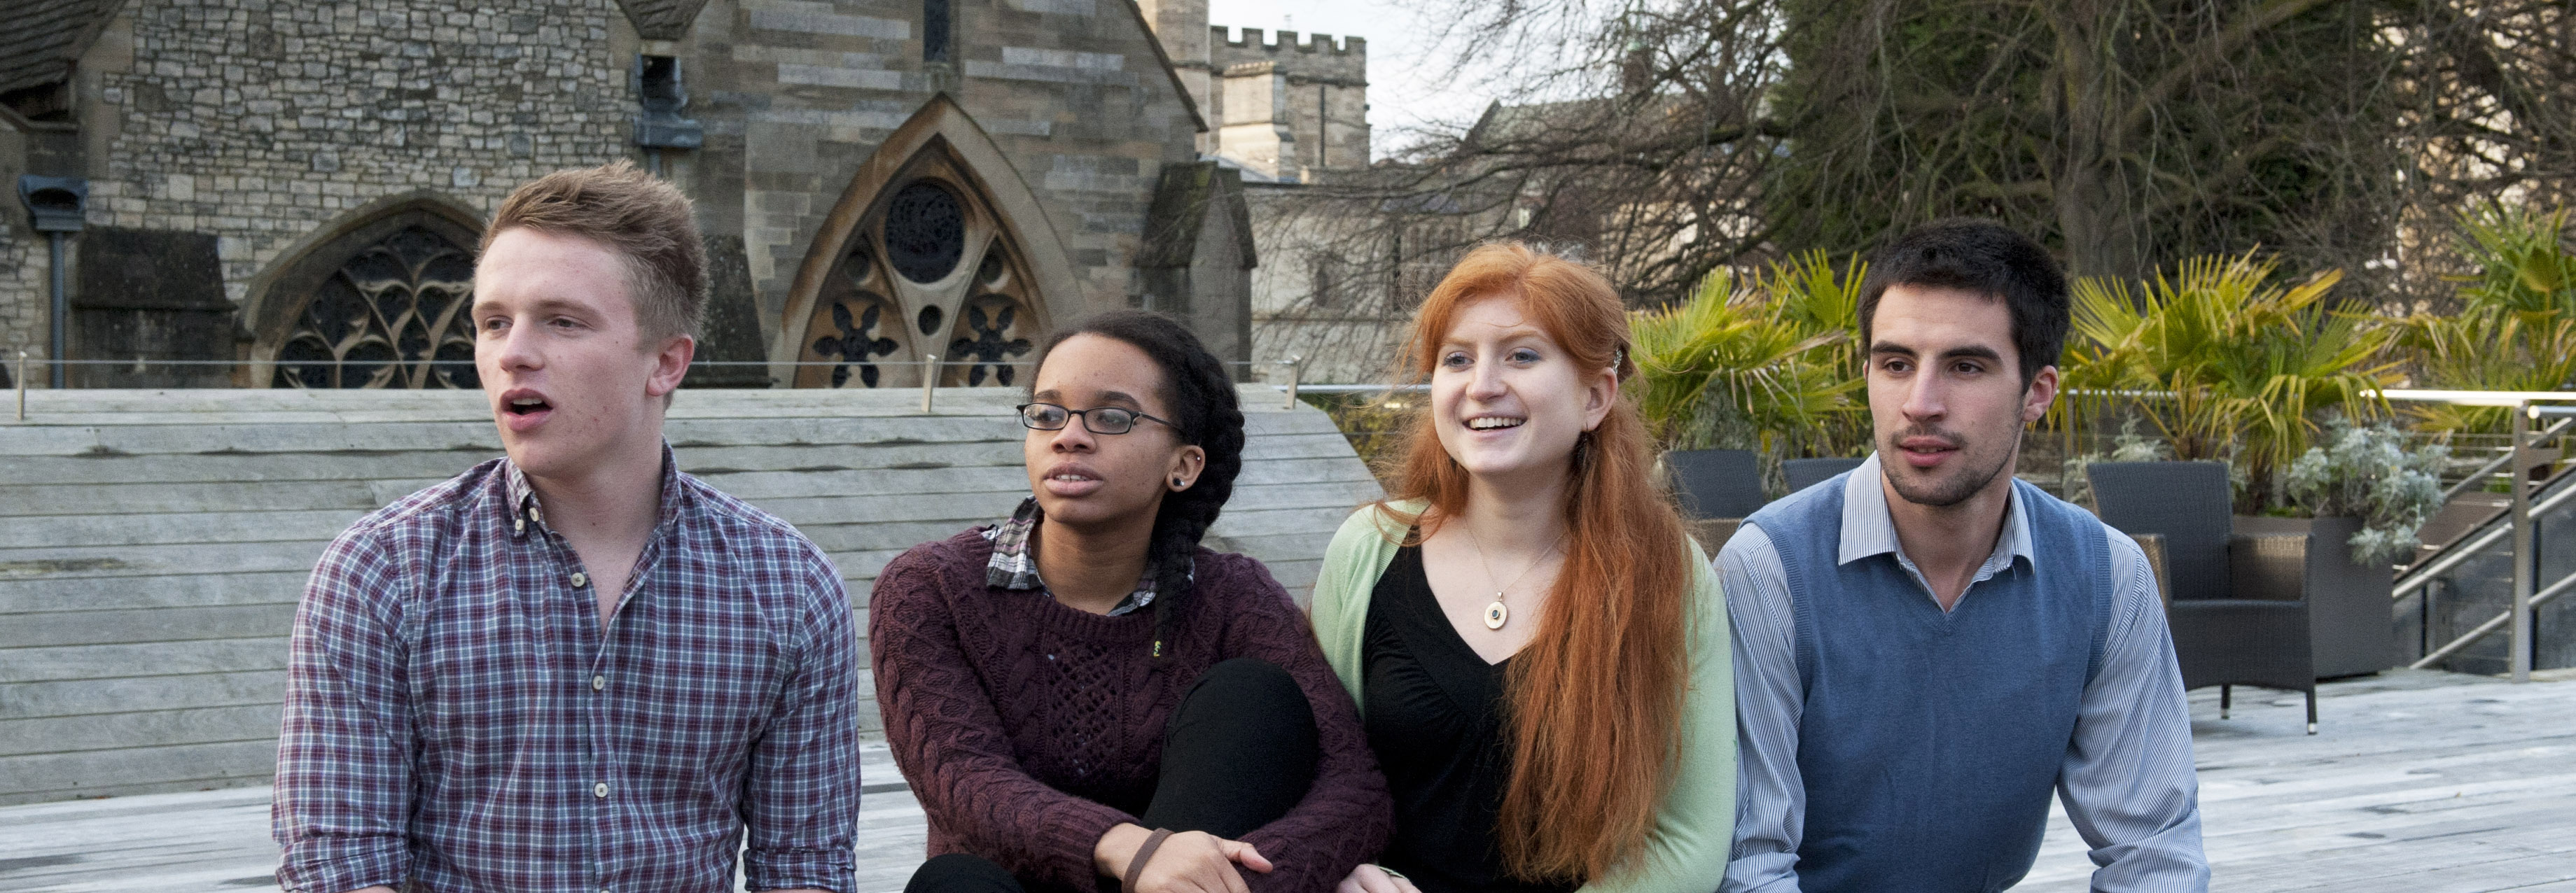 International students | University of Oxford